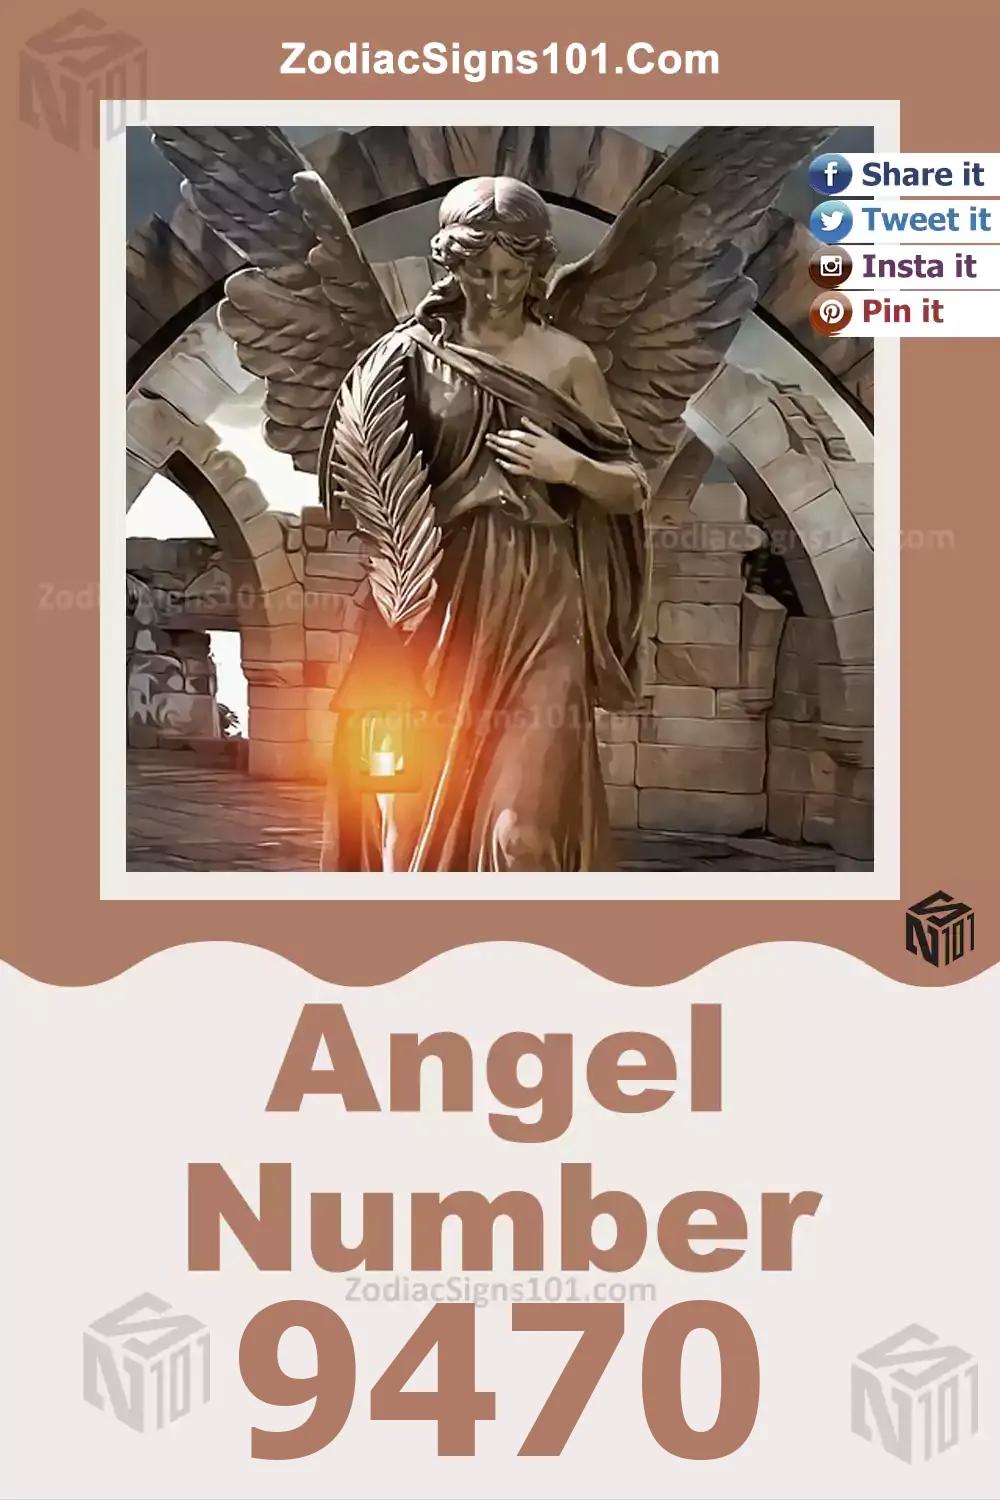 9470-Angel-Number-Meaning.jpg